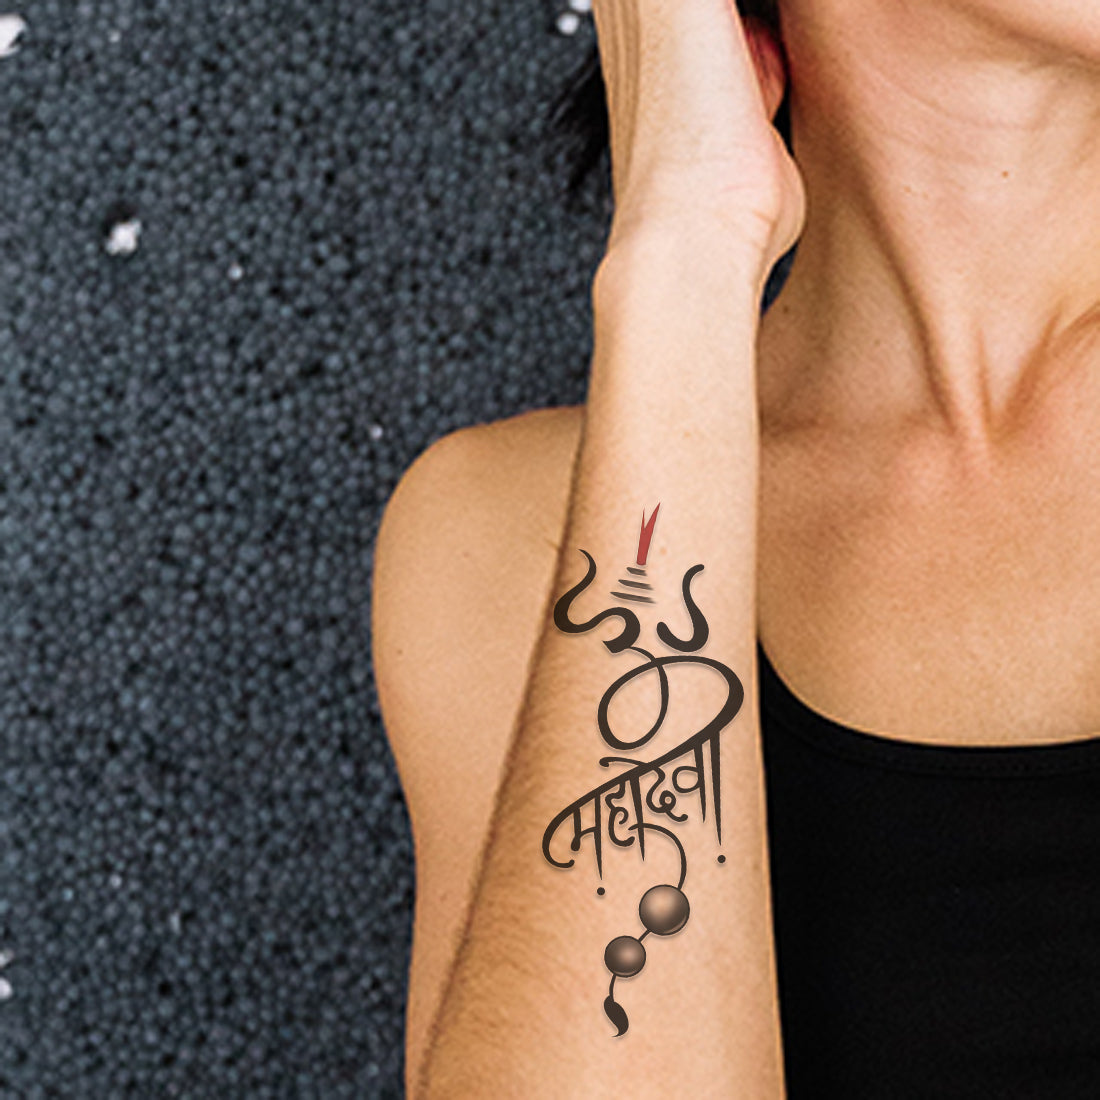 Buy Om Ganesha with Mahakal tattoo Temporary waterproof tattoos For Men  Women Online @ ₹199 from ShopClues